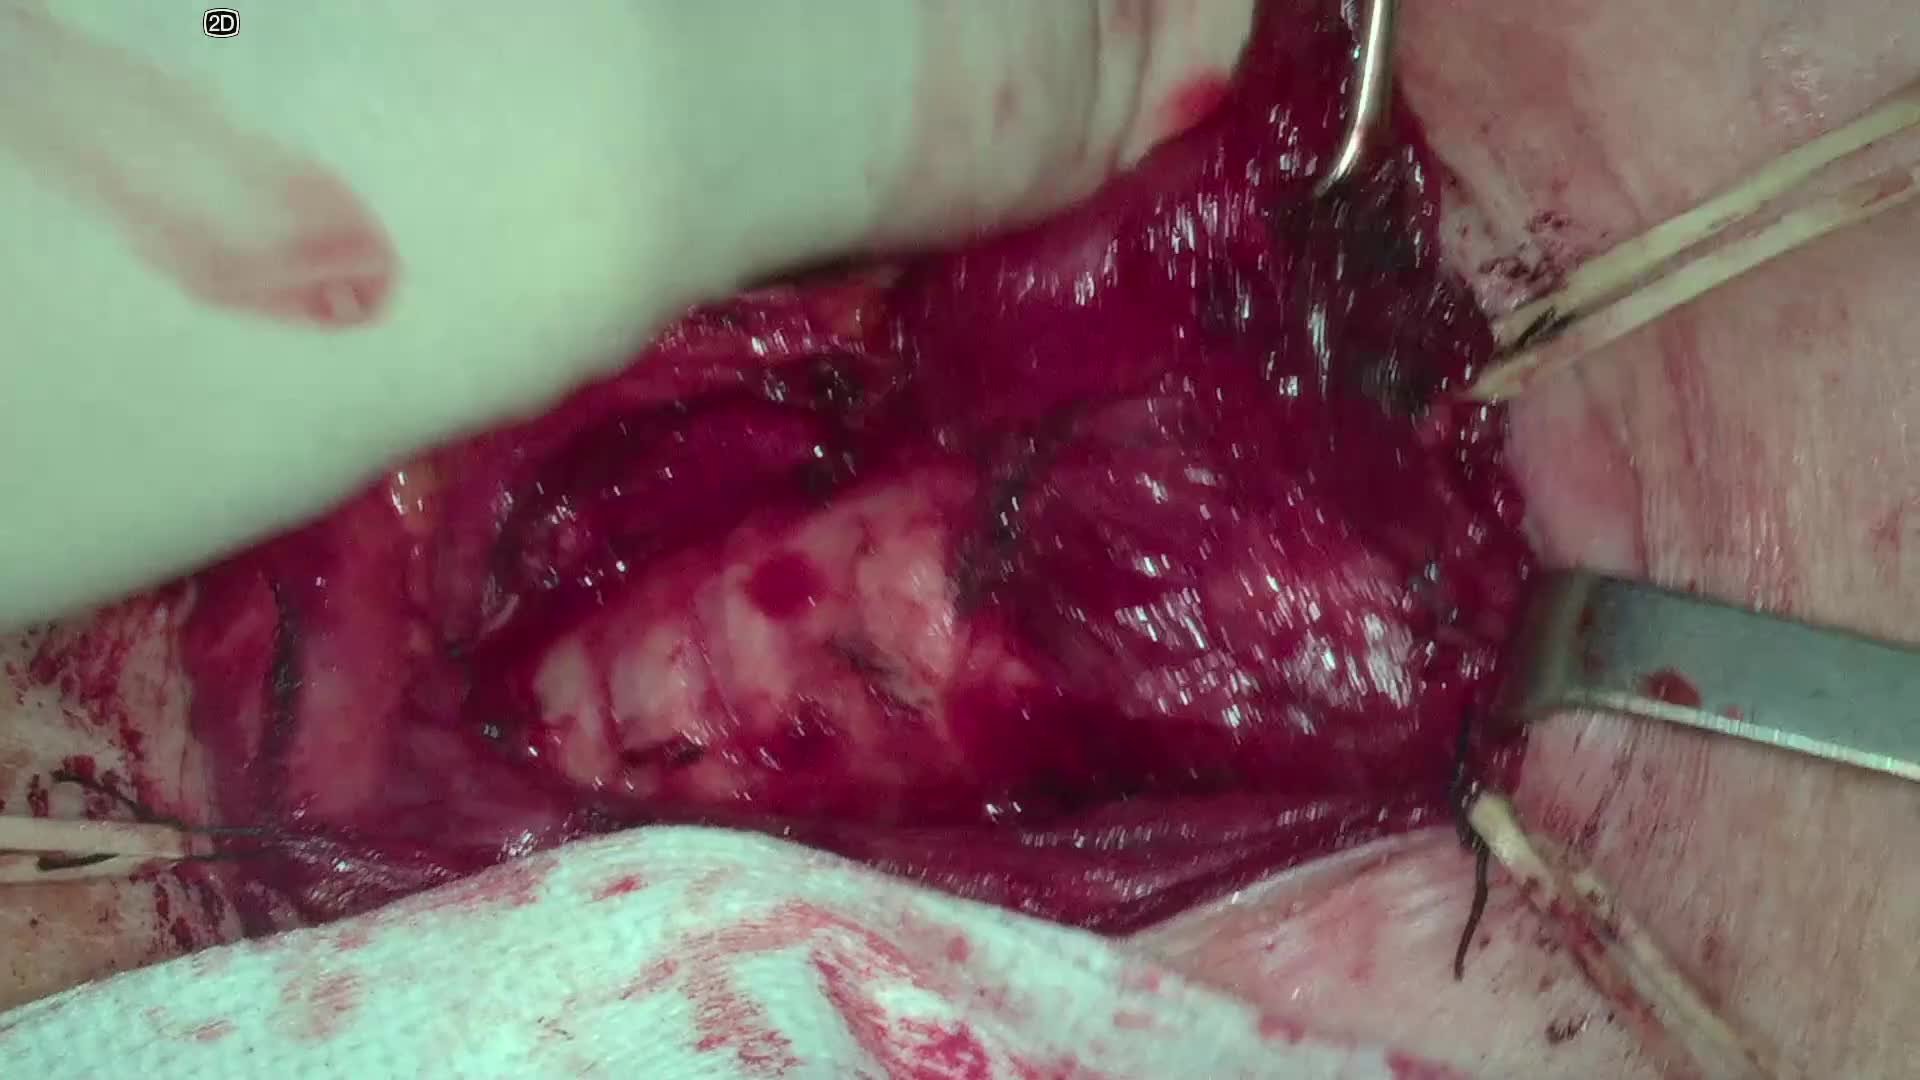 Medialization thyroplasty under general anesthesia